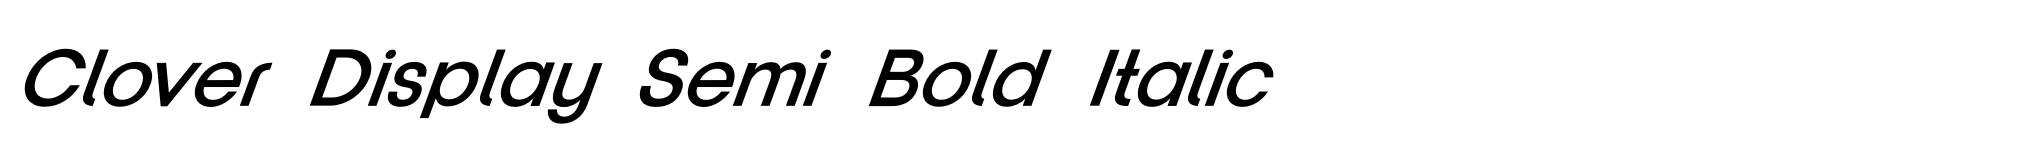 Clover Display Semi Bold Italic image